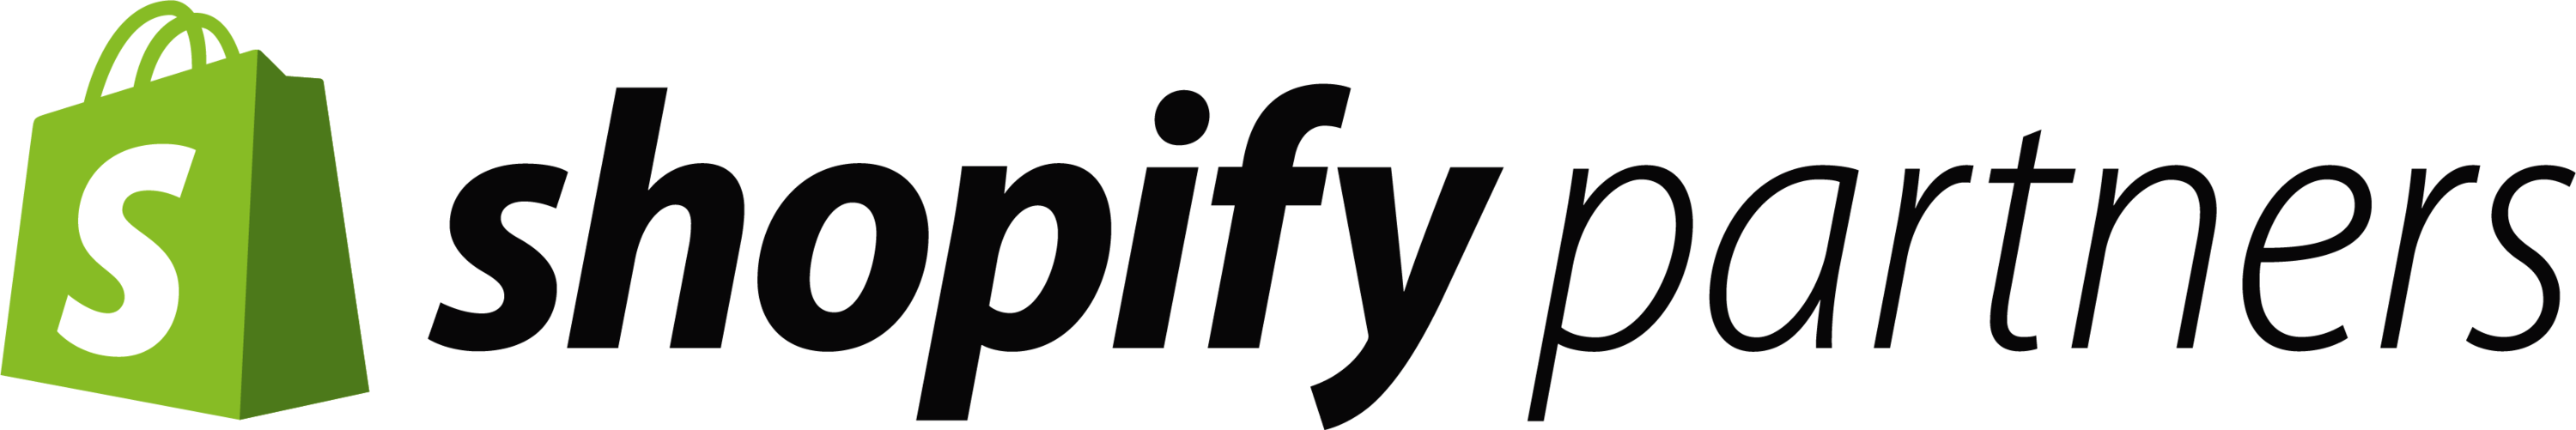 Shopify Partners - Digital Marketing Company Agency Australia